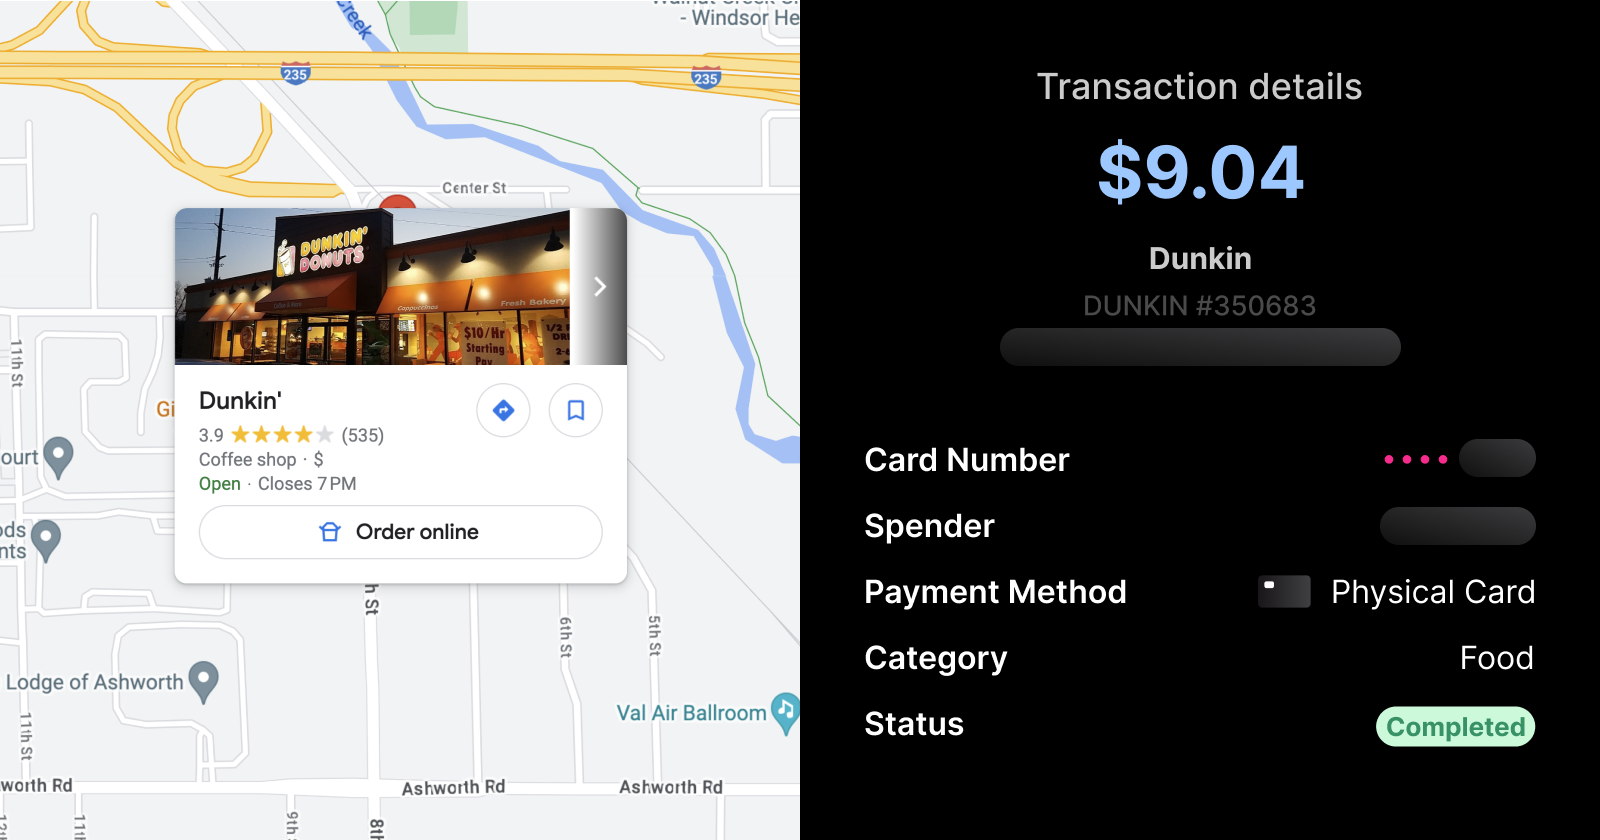 Rain Transaction Details UI for Dunkin' transaction | Brale